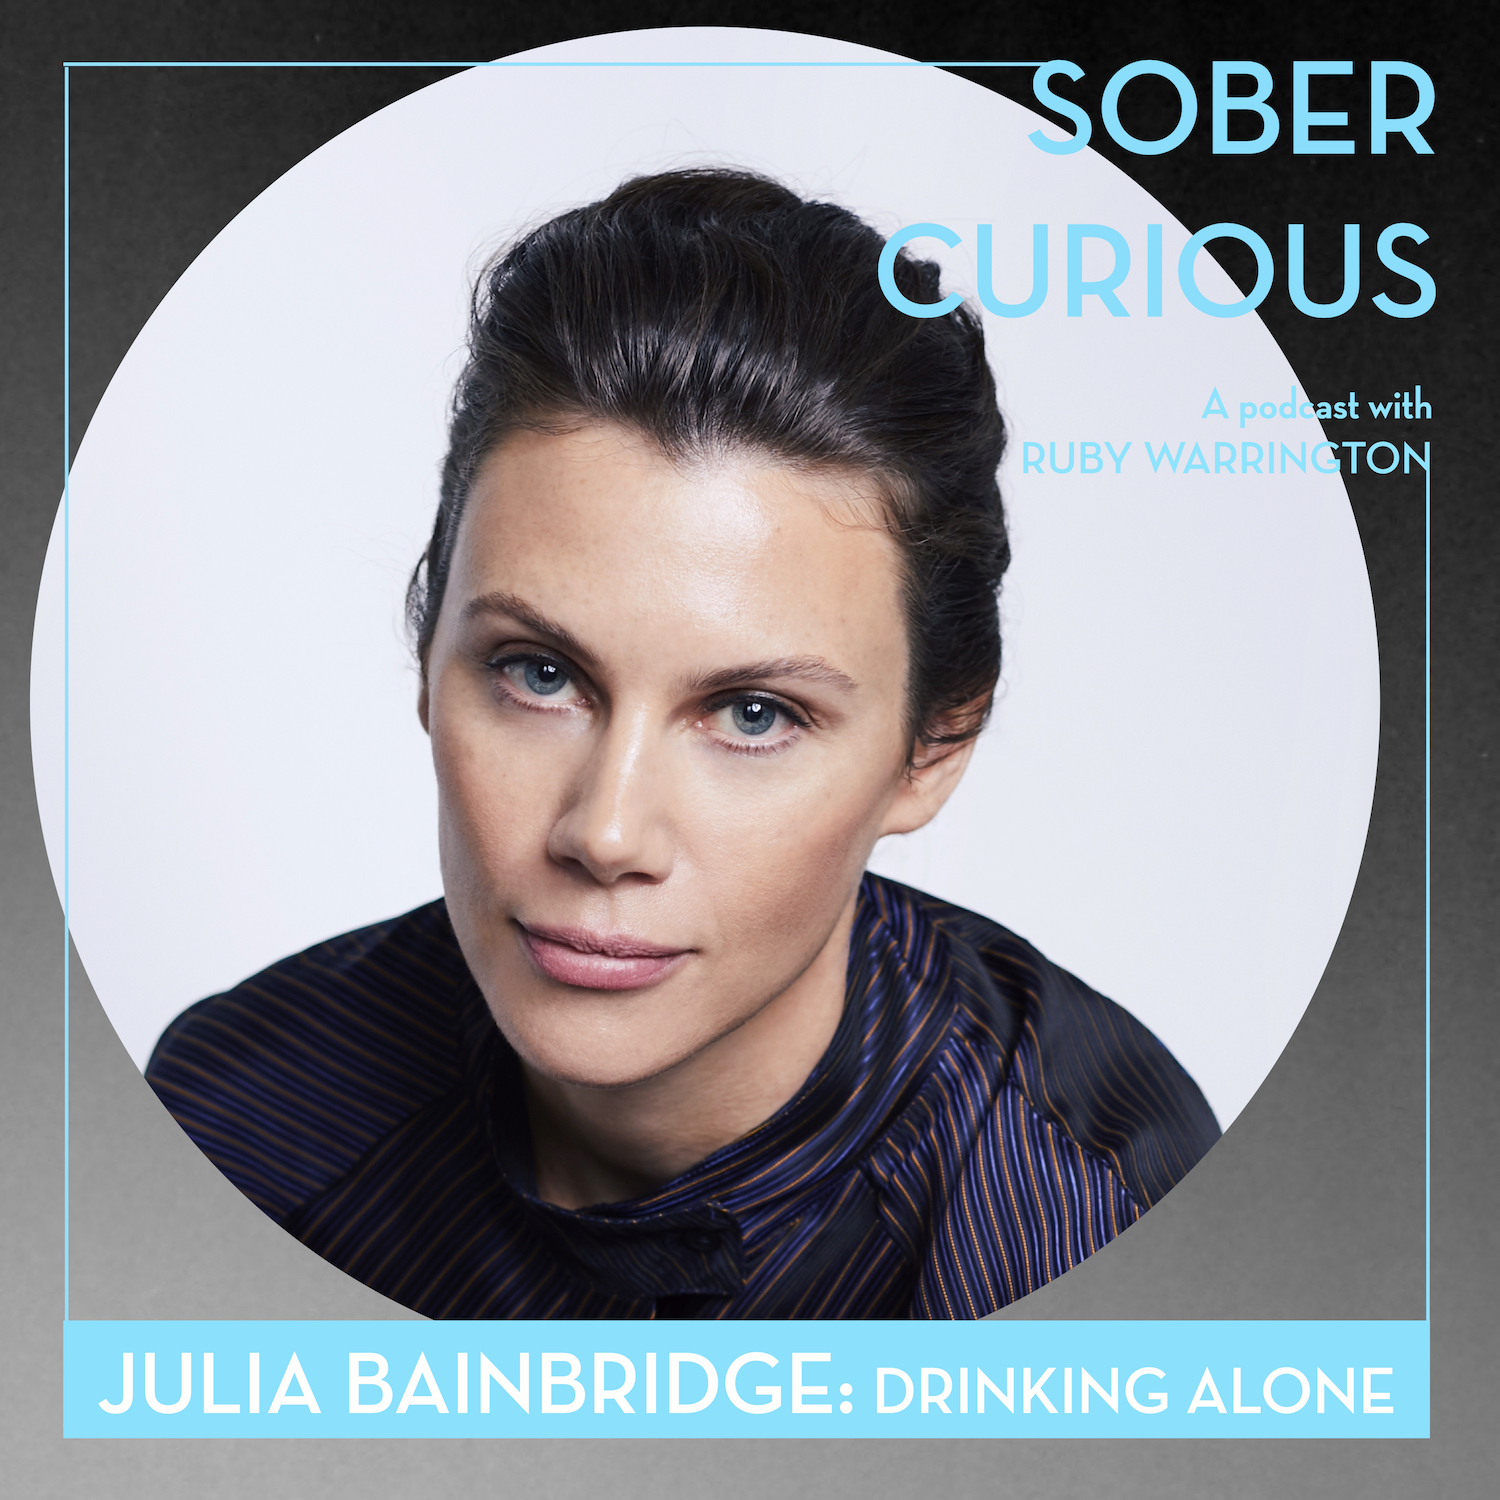 Julia Bainbridge Sober Curious podcast Ruby Warrington